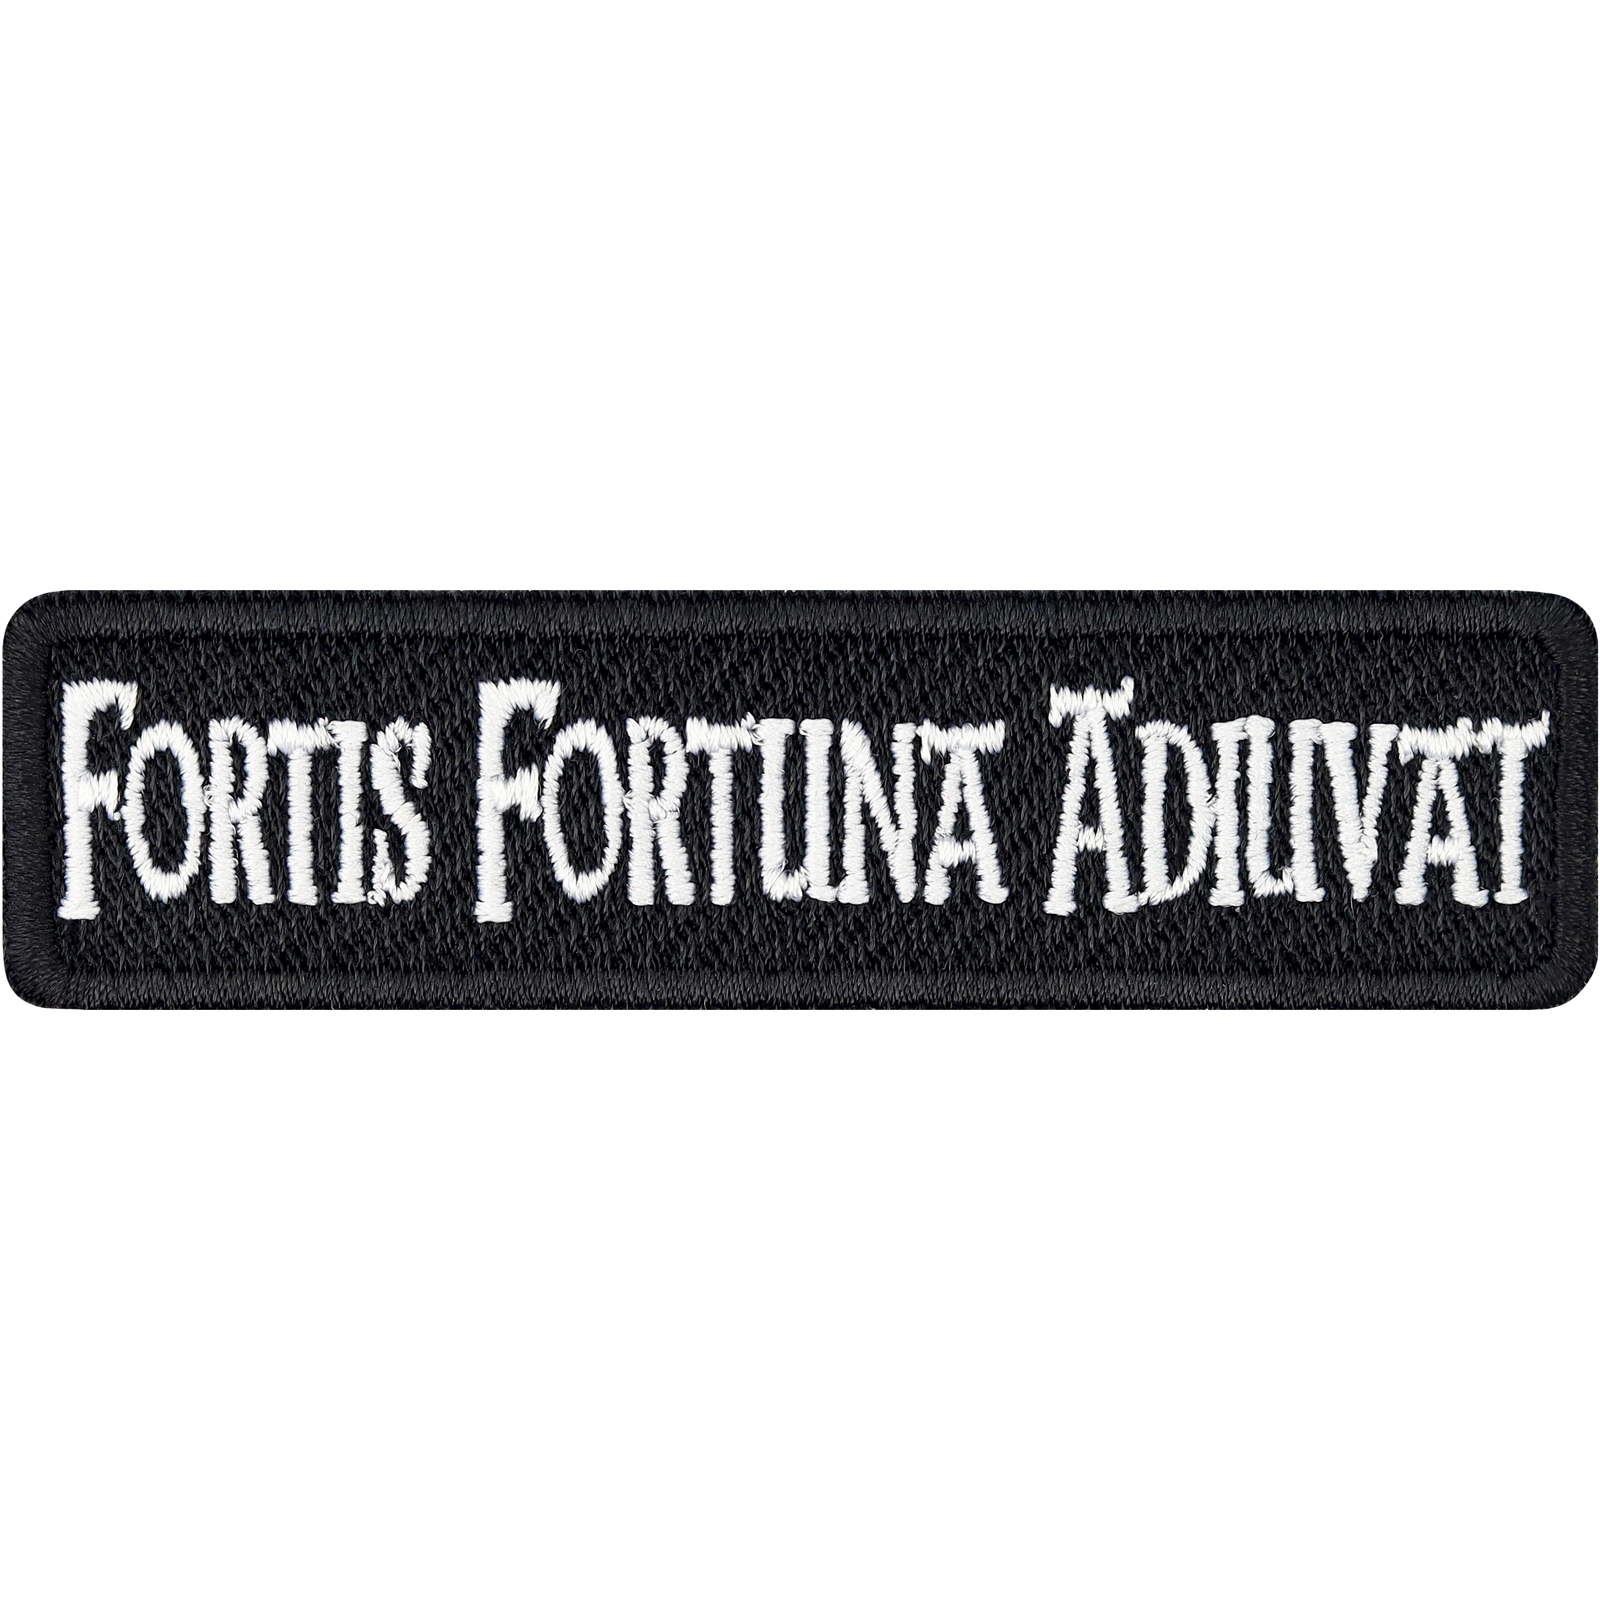 Fortis Fortuna Adiuvat - Patch